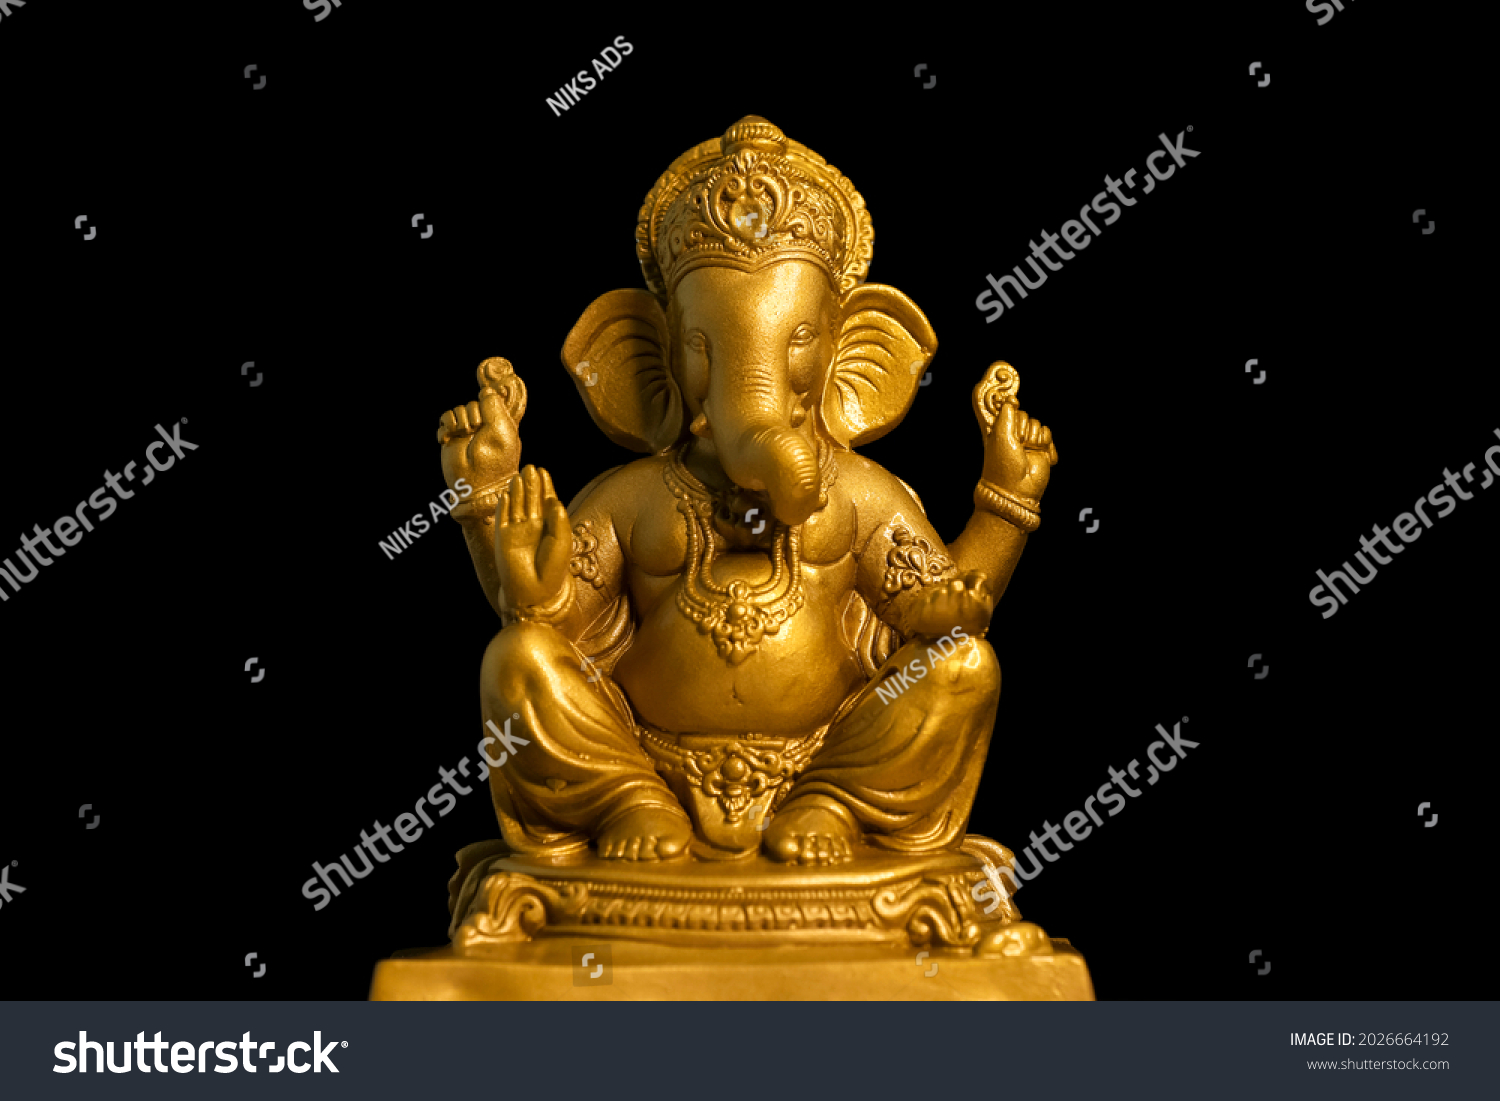 Golden lord ganesha sclupture over dark background. celebrate lord ganesha festival. #2026664192